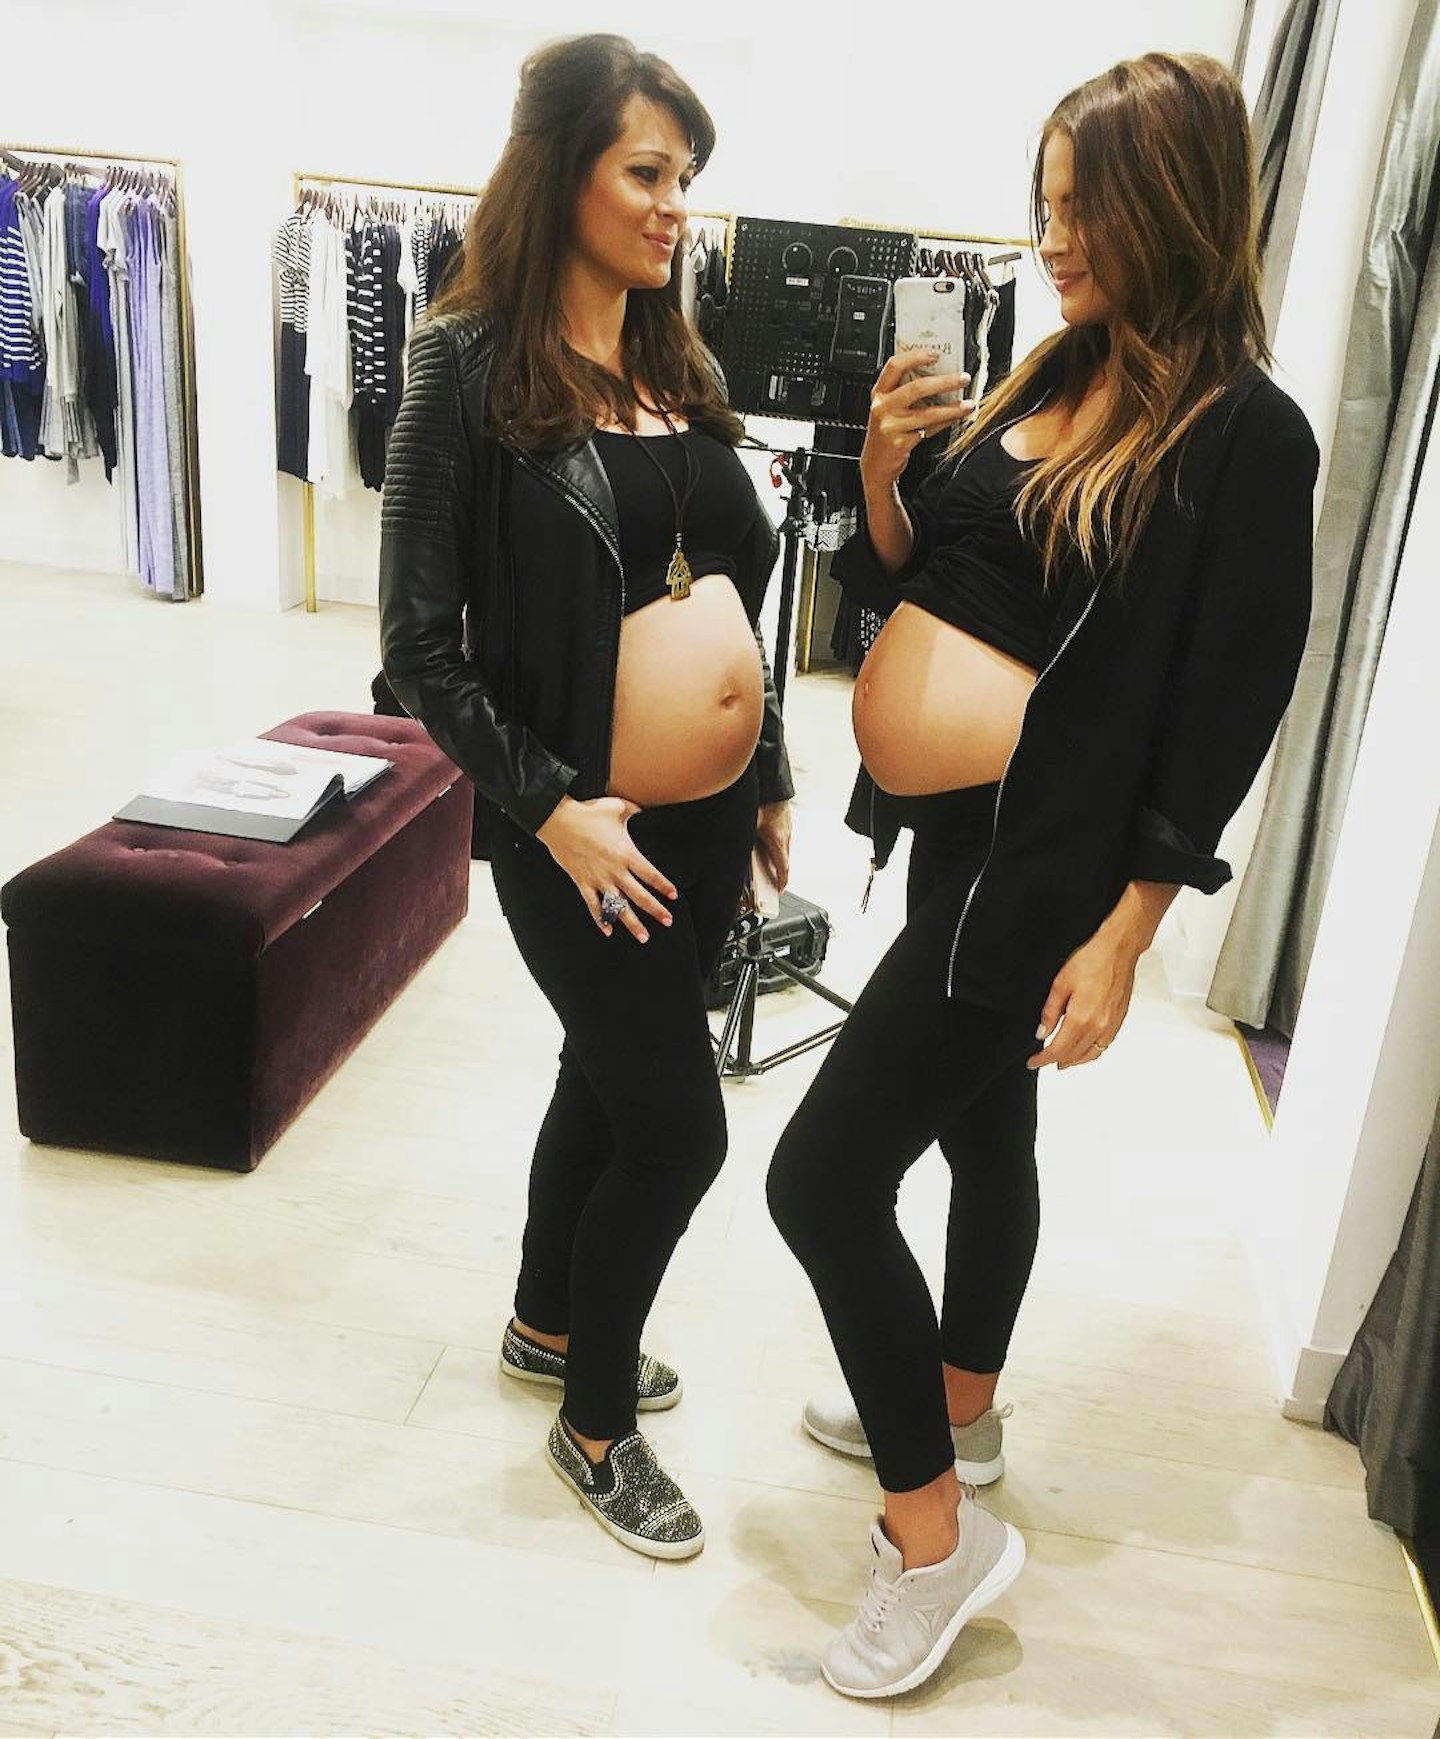 binky-alexandra-felstead-sister-anna-louise-pregnant-bumps